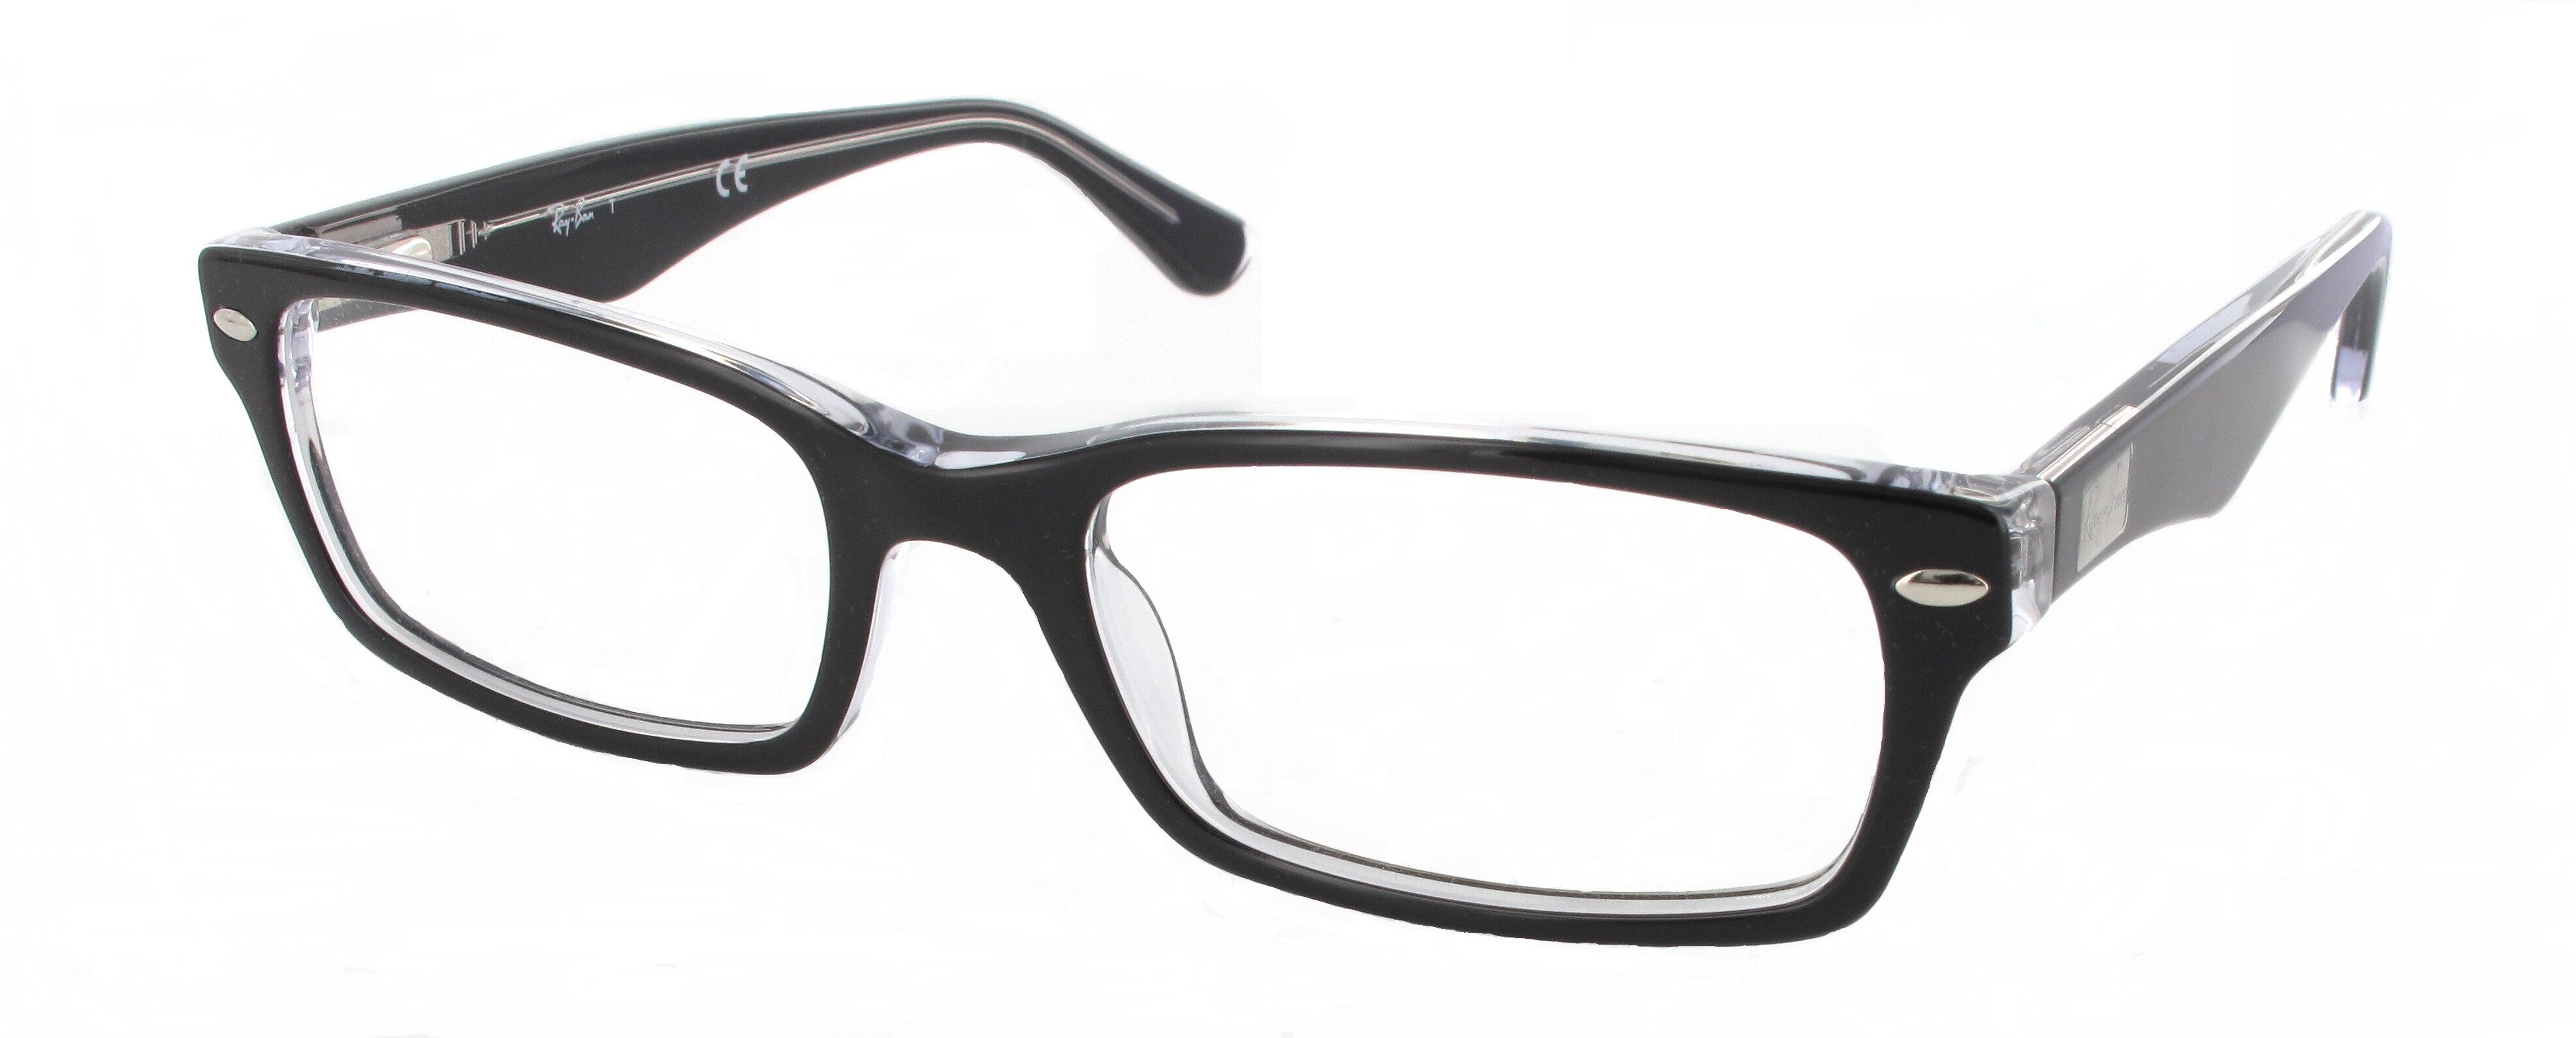 Leesbril Ray-Ban RX5206-2034-52 zwart/transparant | Mijnleesbril.nl